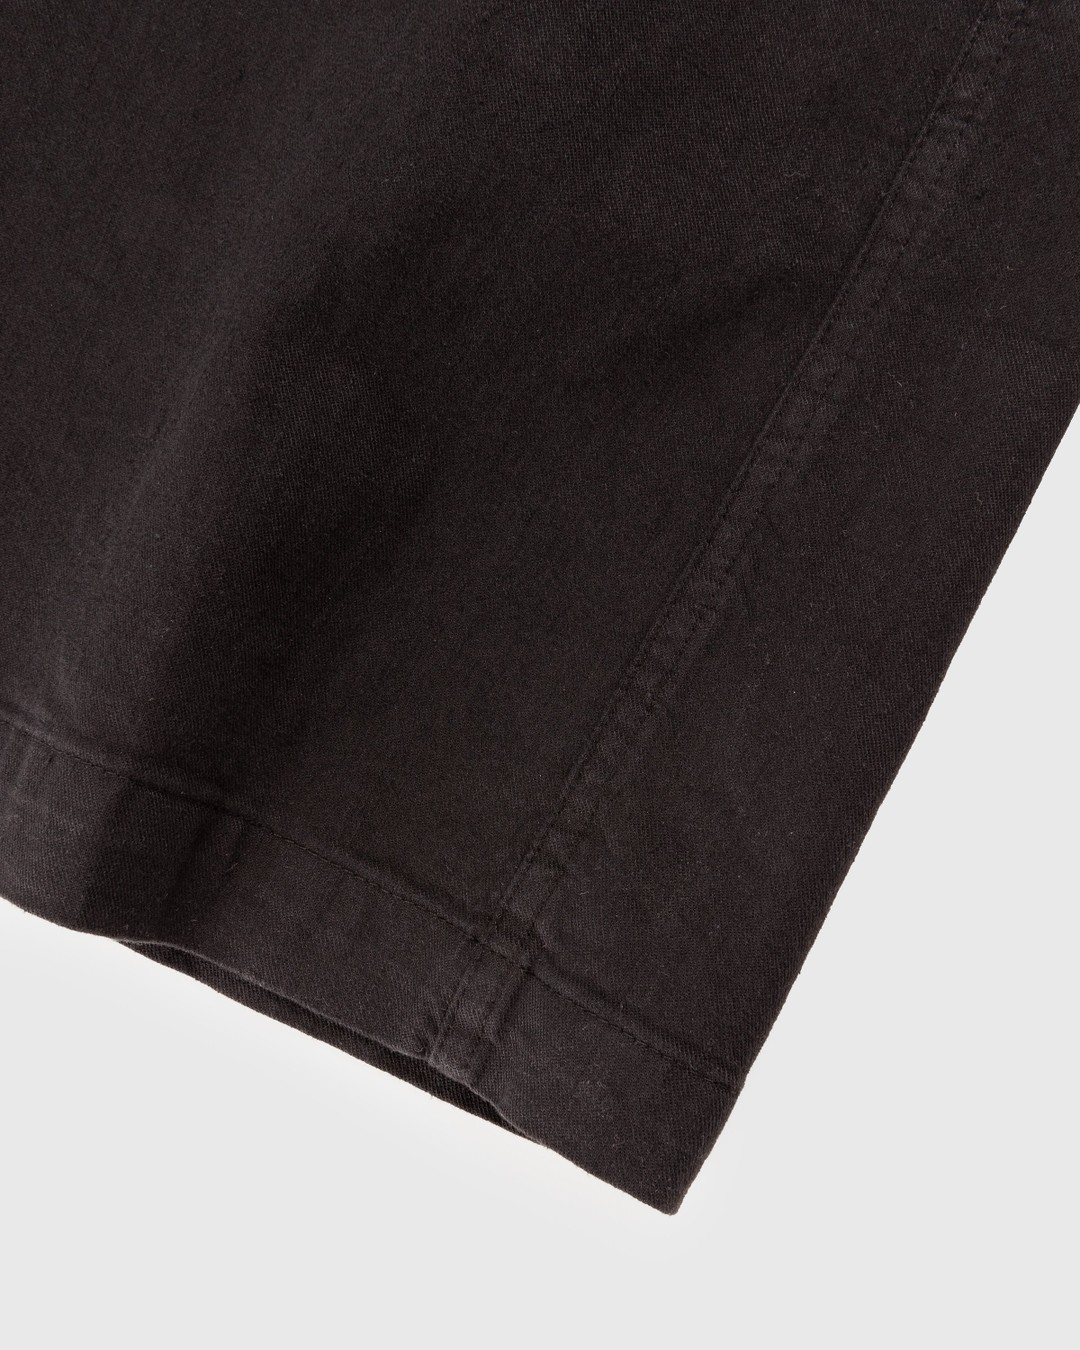 Winnie New York – Linen Cargo Pants Black - Pants - Black - Image 4